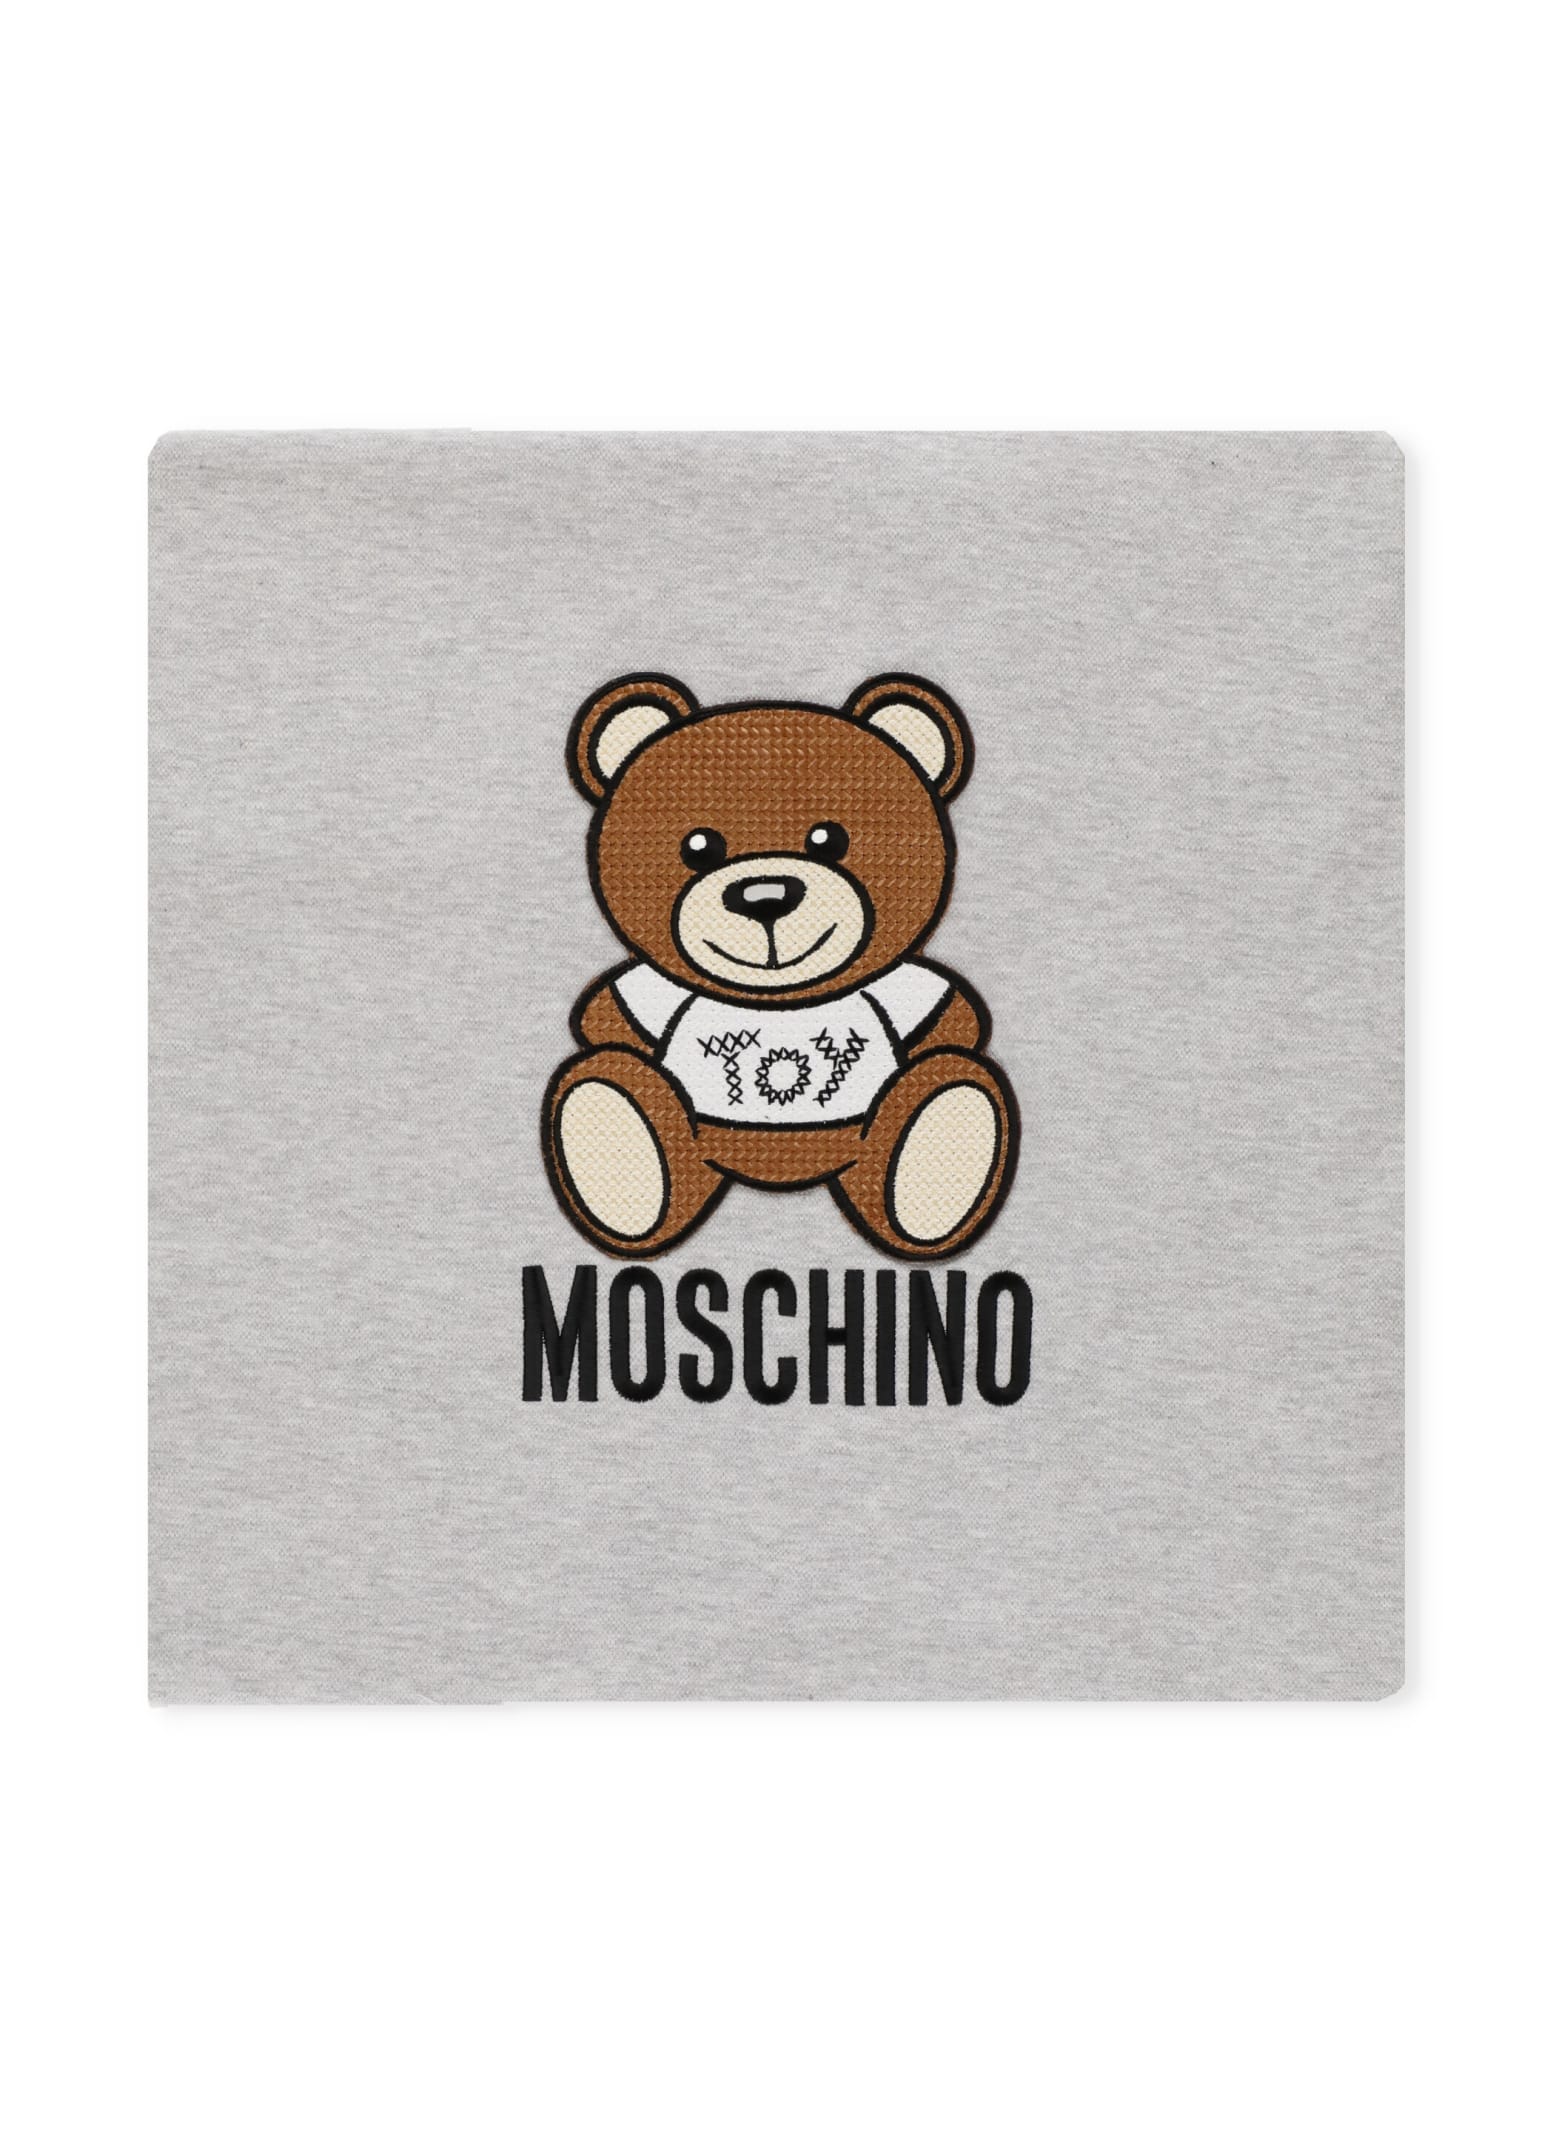 Moschino Teddy Blanket